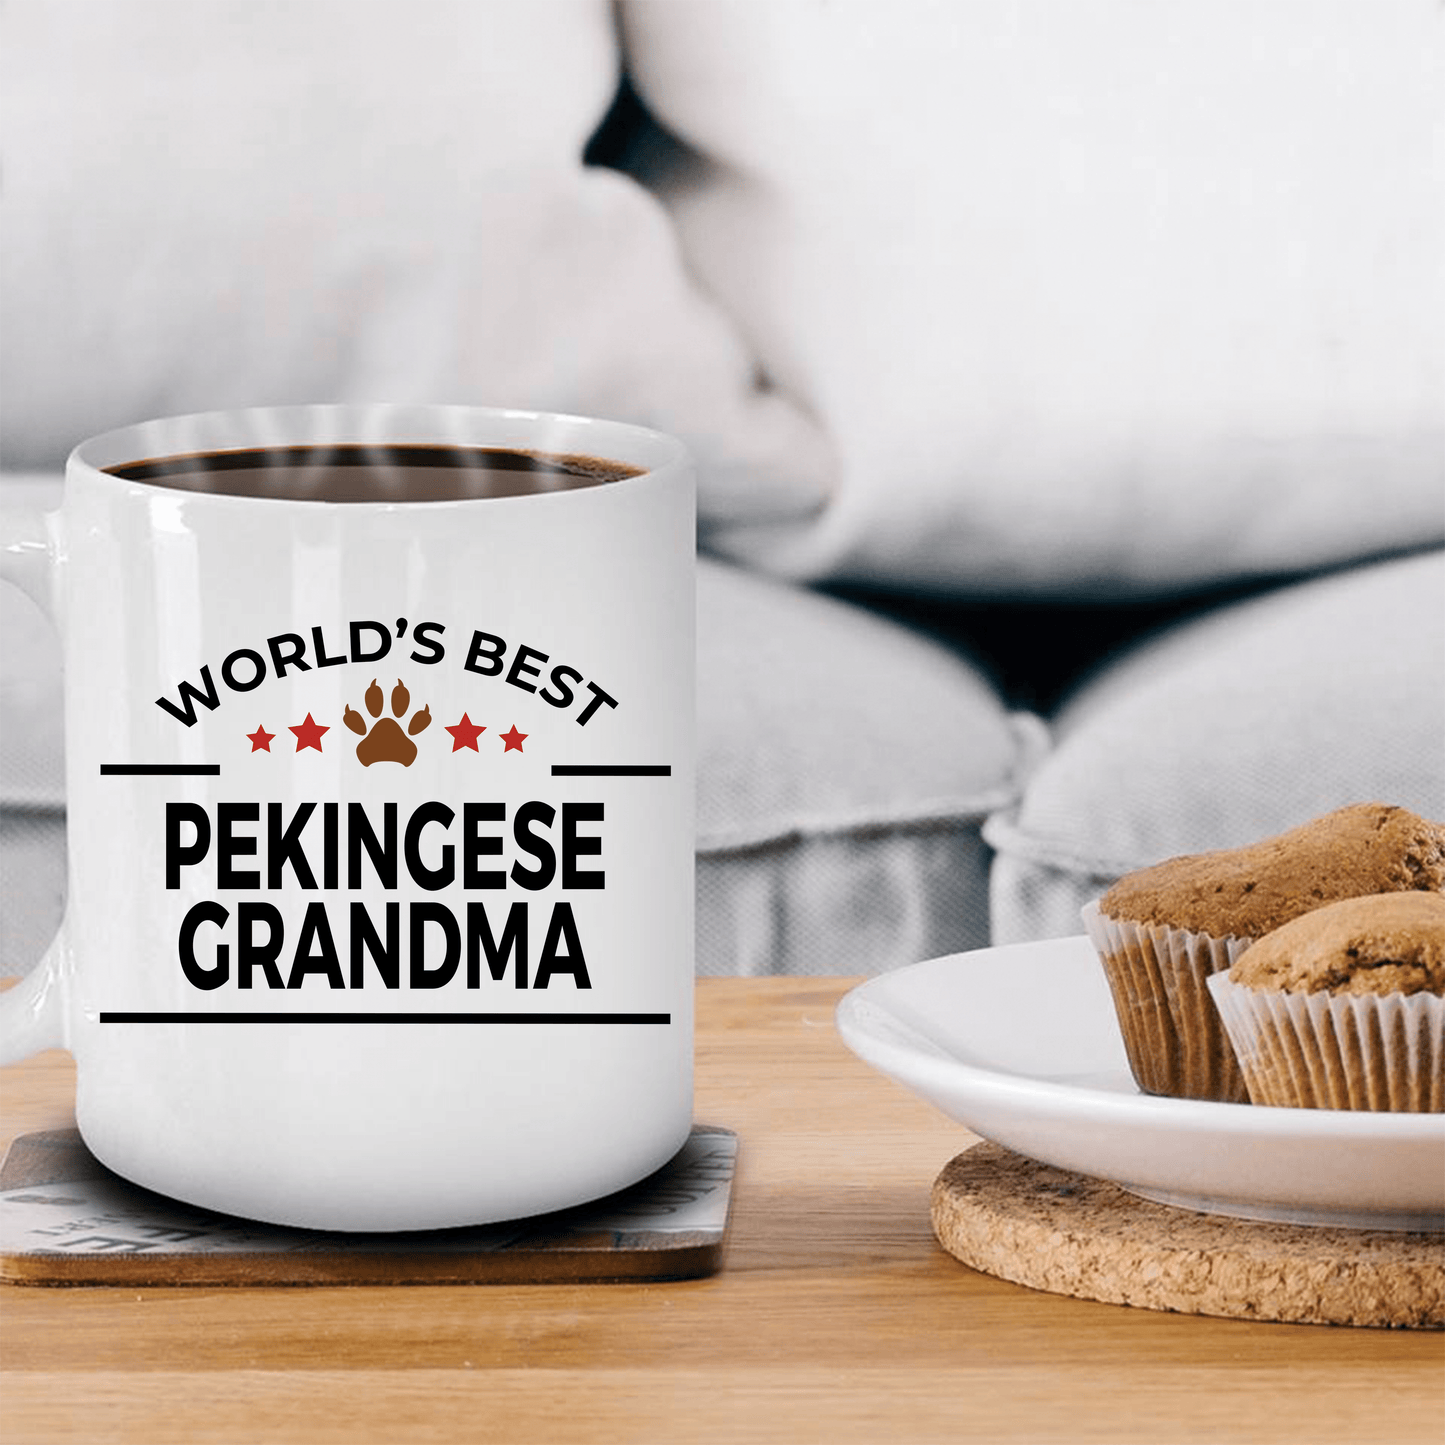 Pekingese Dog Lover Gift World's Best Grandma Birthday Mother's Day White Ceramic Coffee Mug